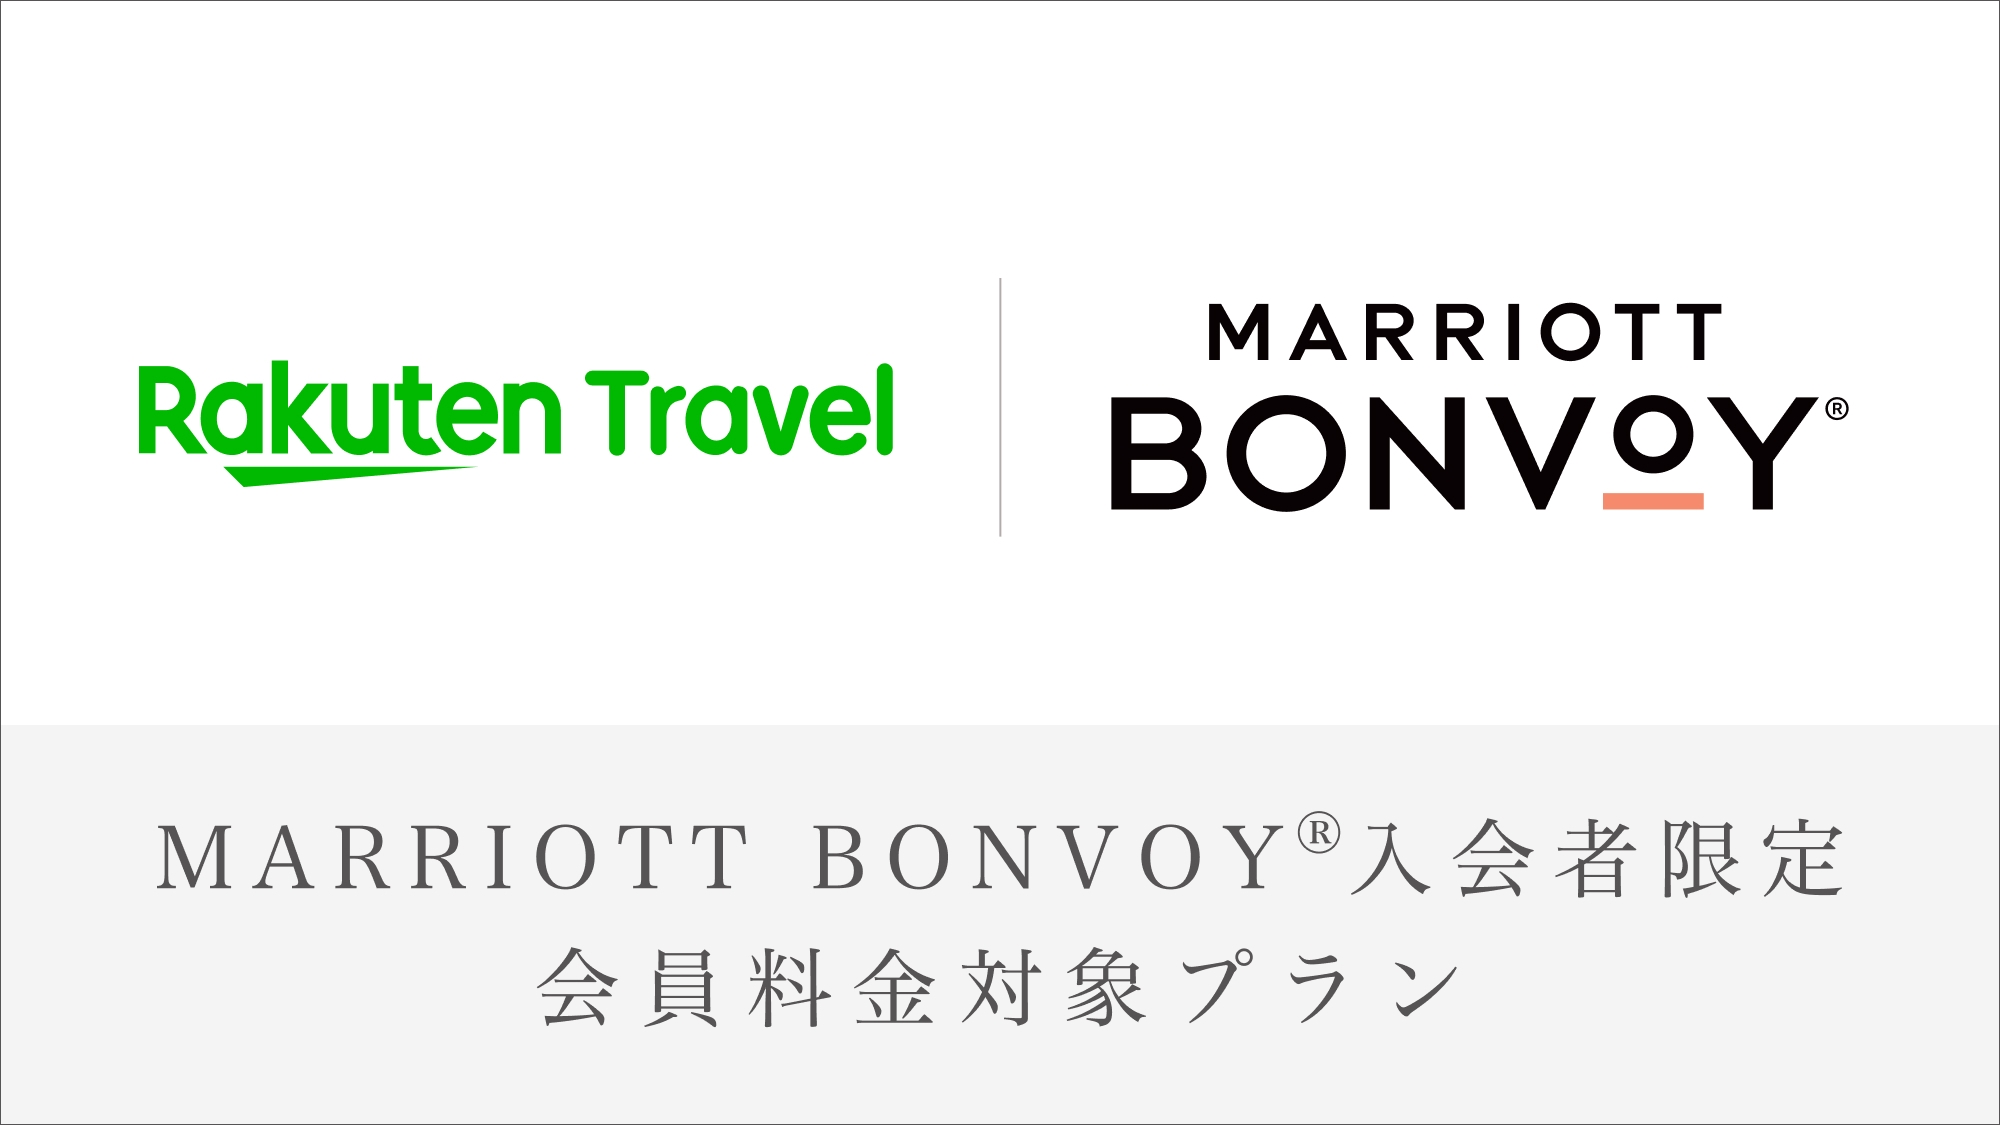 【Marriott Bonvoy会員価格対象プラン】お部屋代のみシンプル♪ベーシックプラン(素泊り)